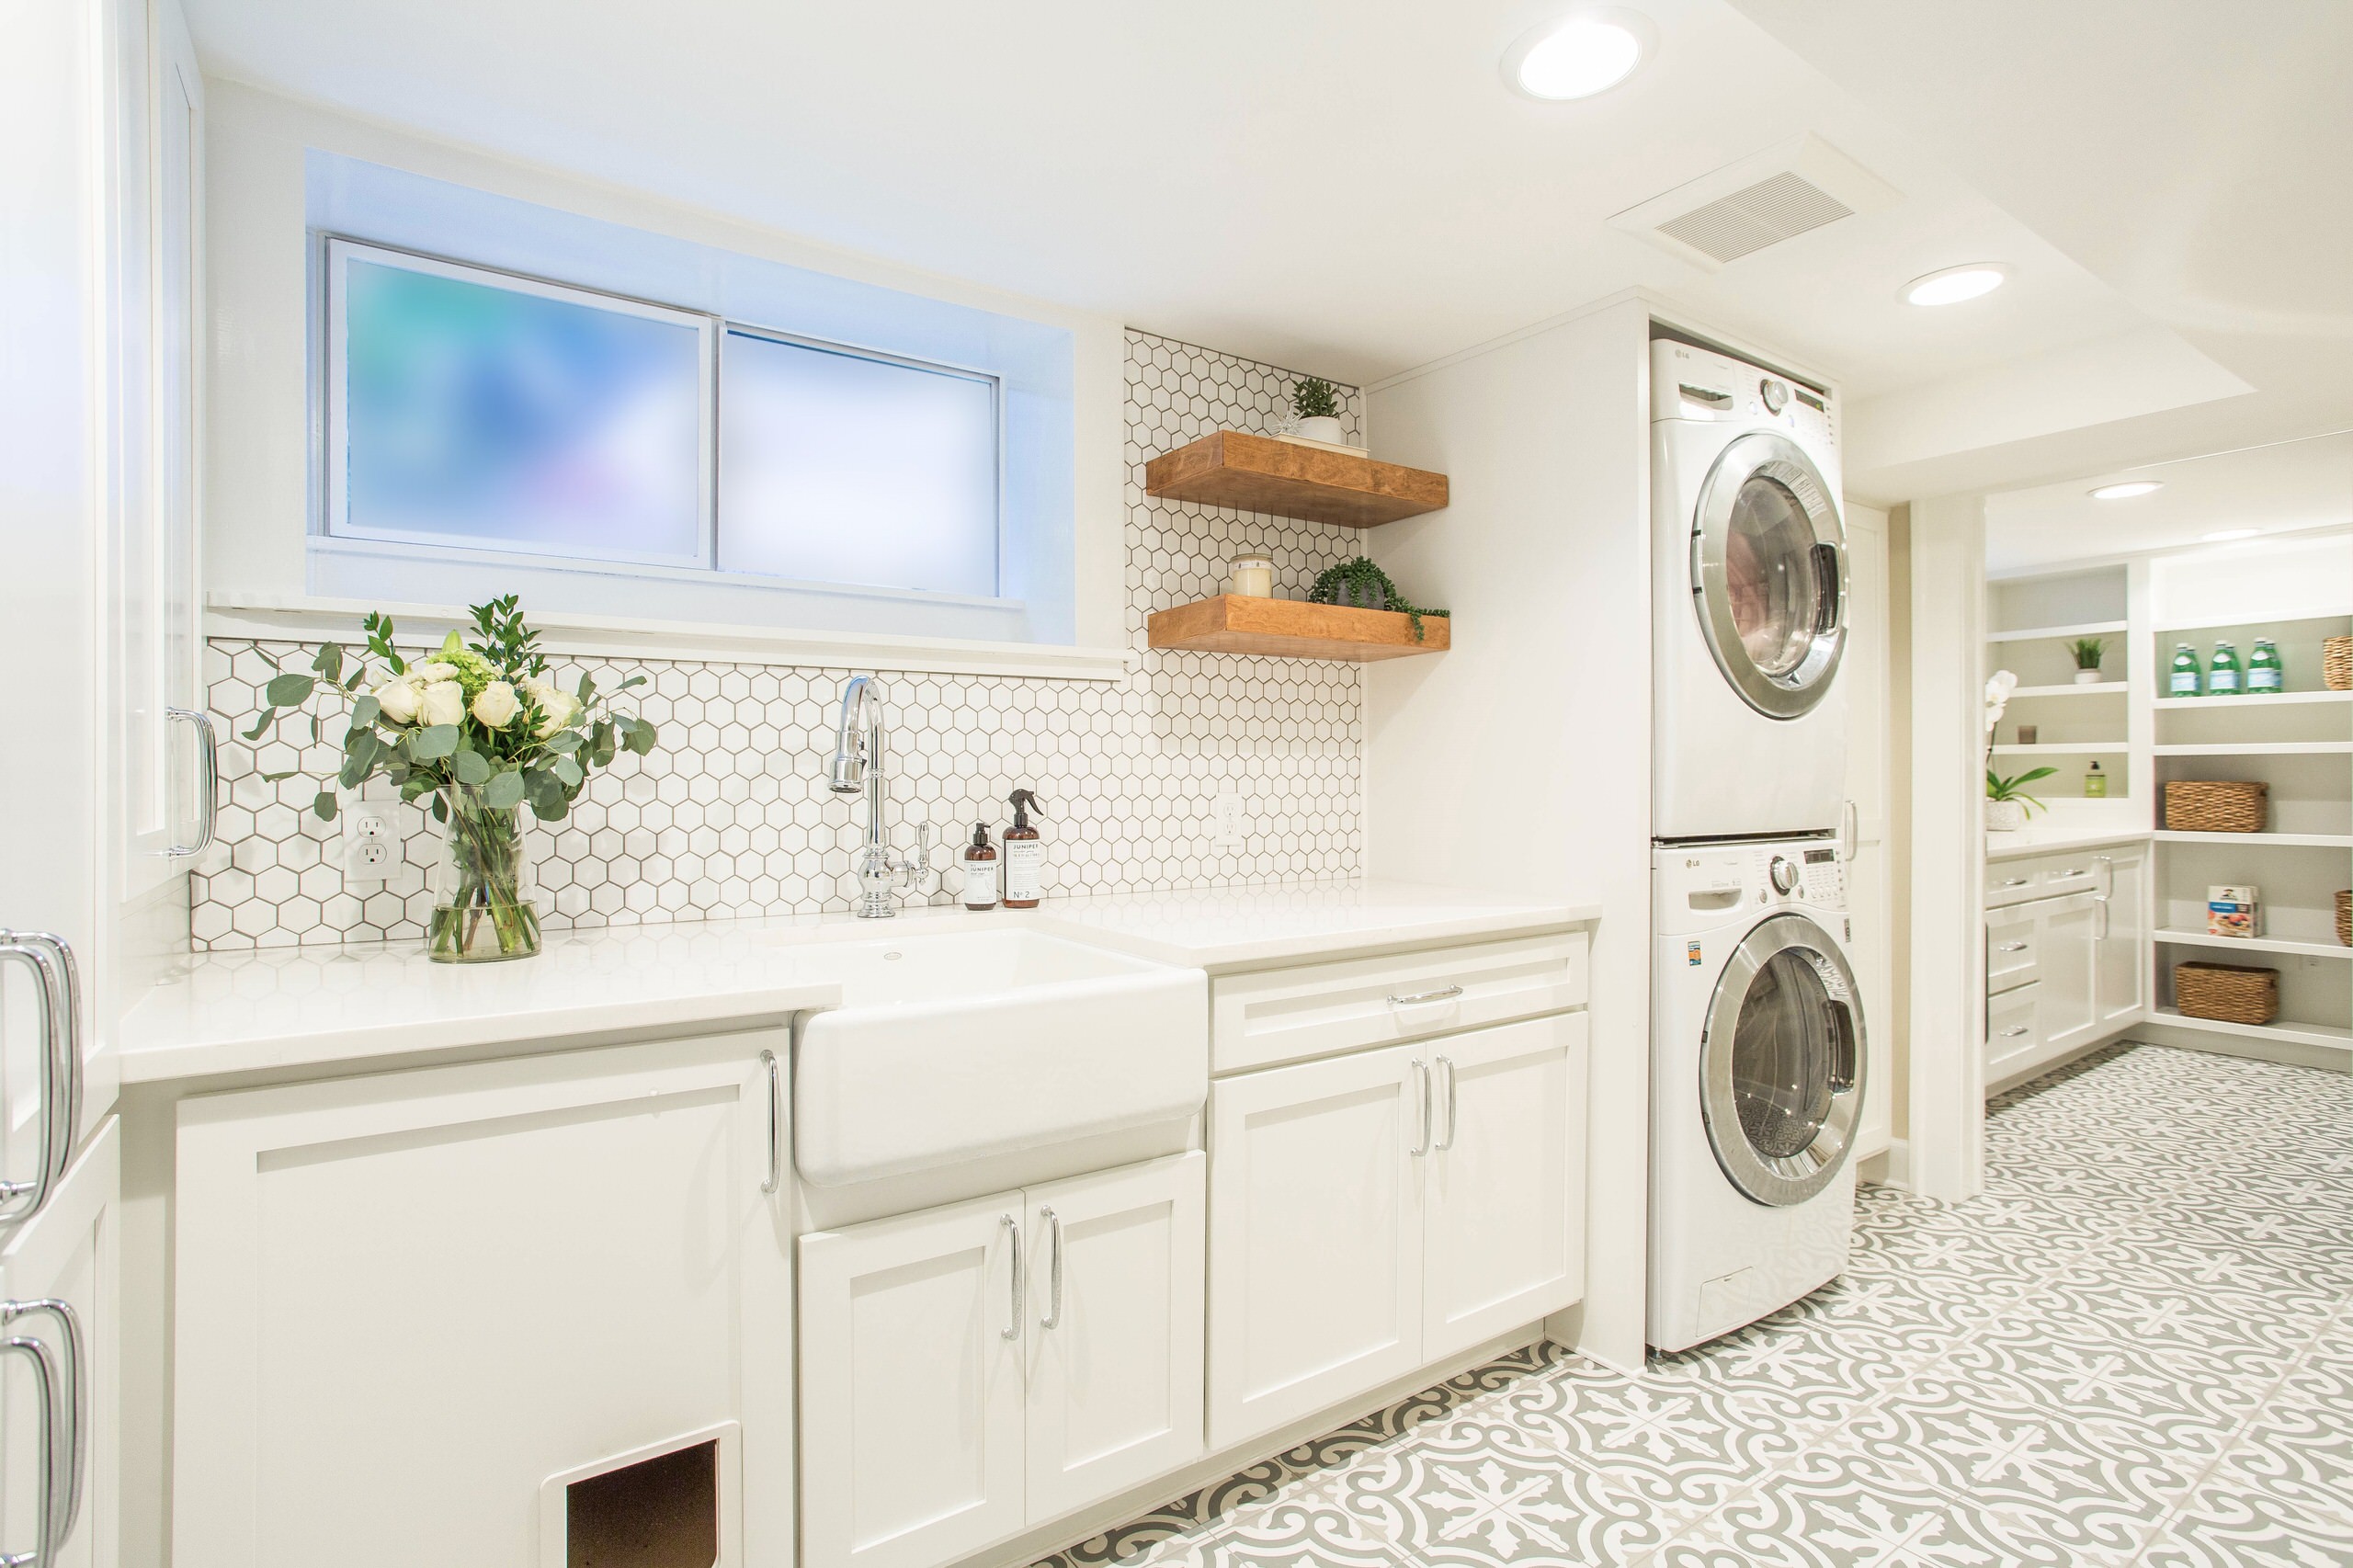 6 Laundry Room Countertop Ideas from Lavish to Low-Key